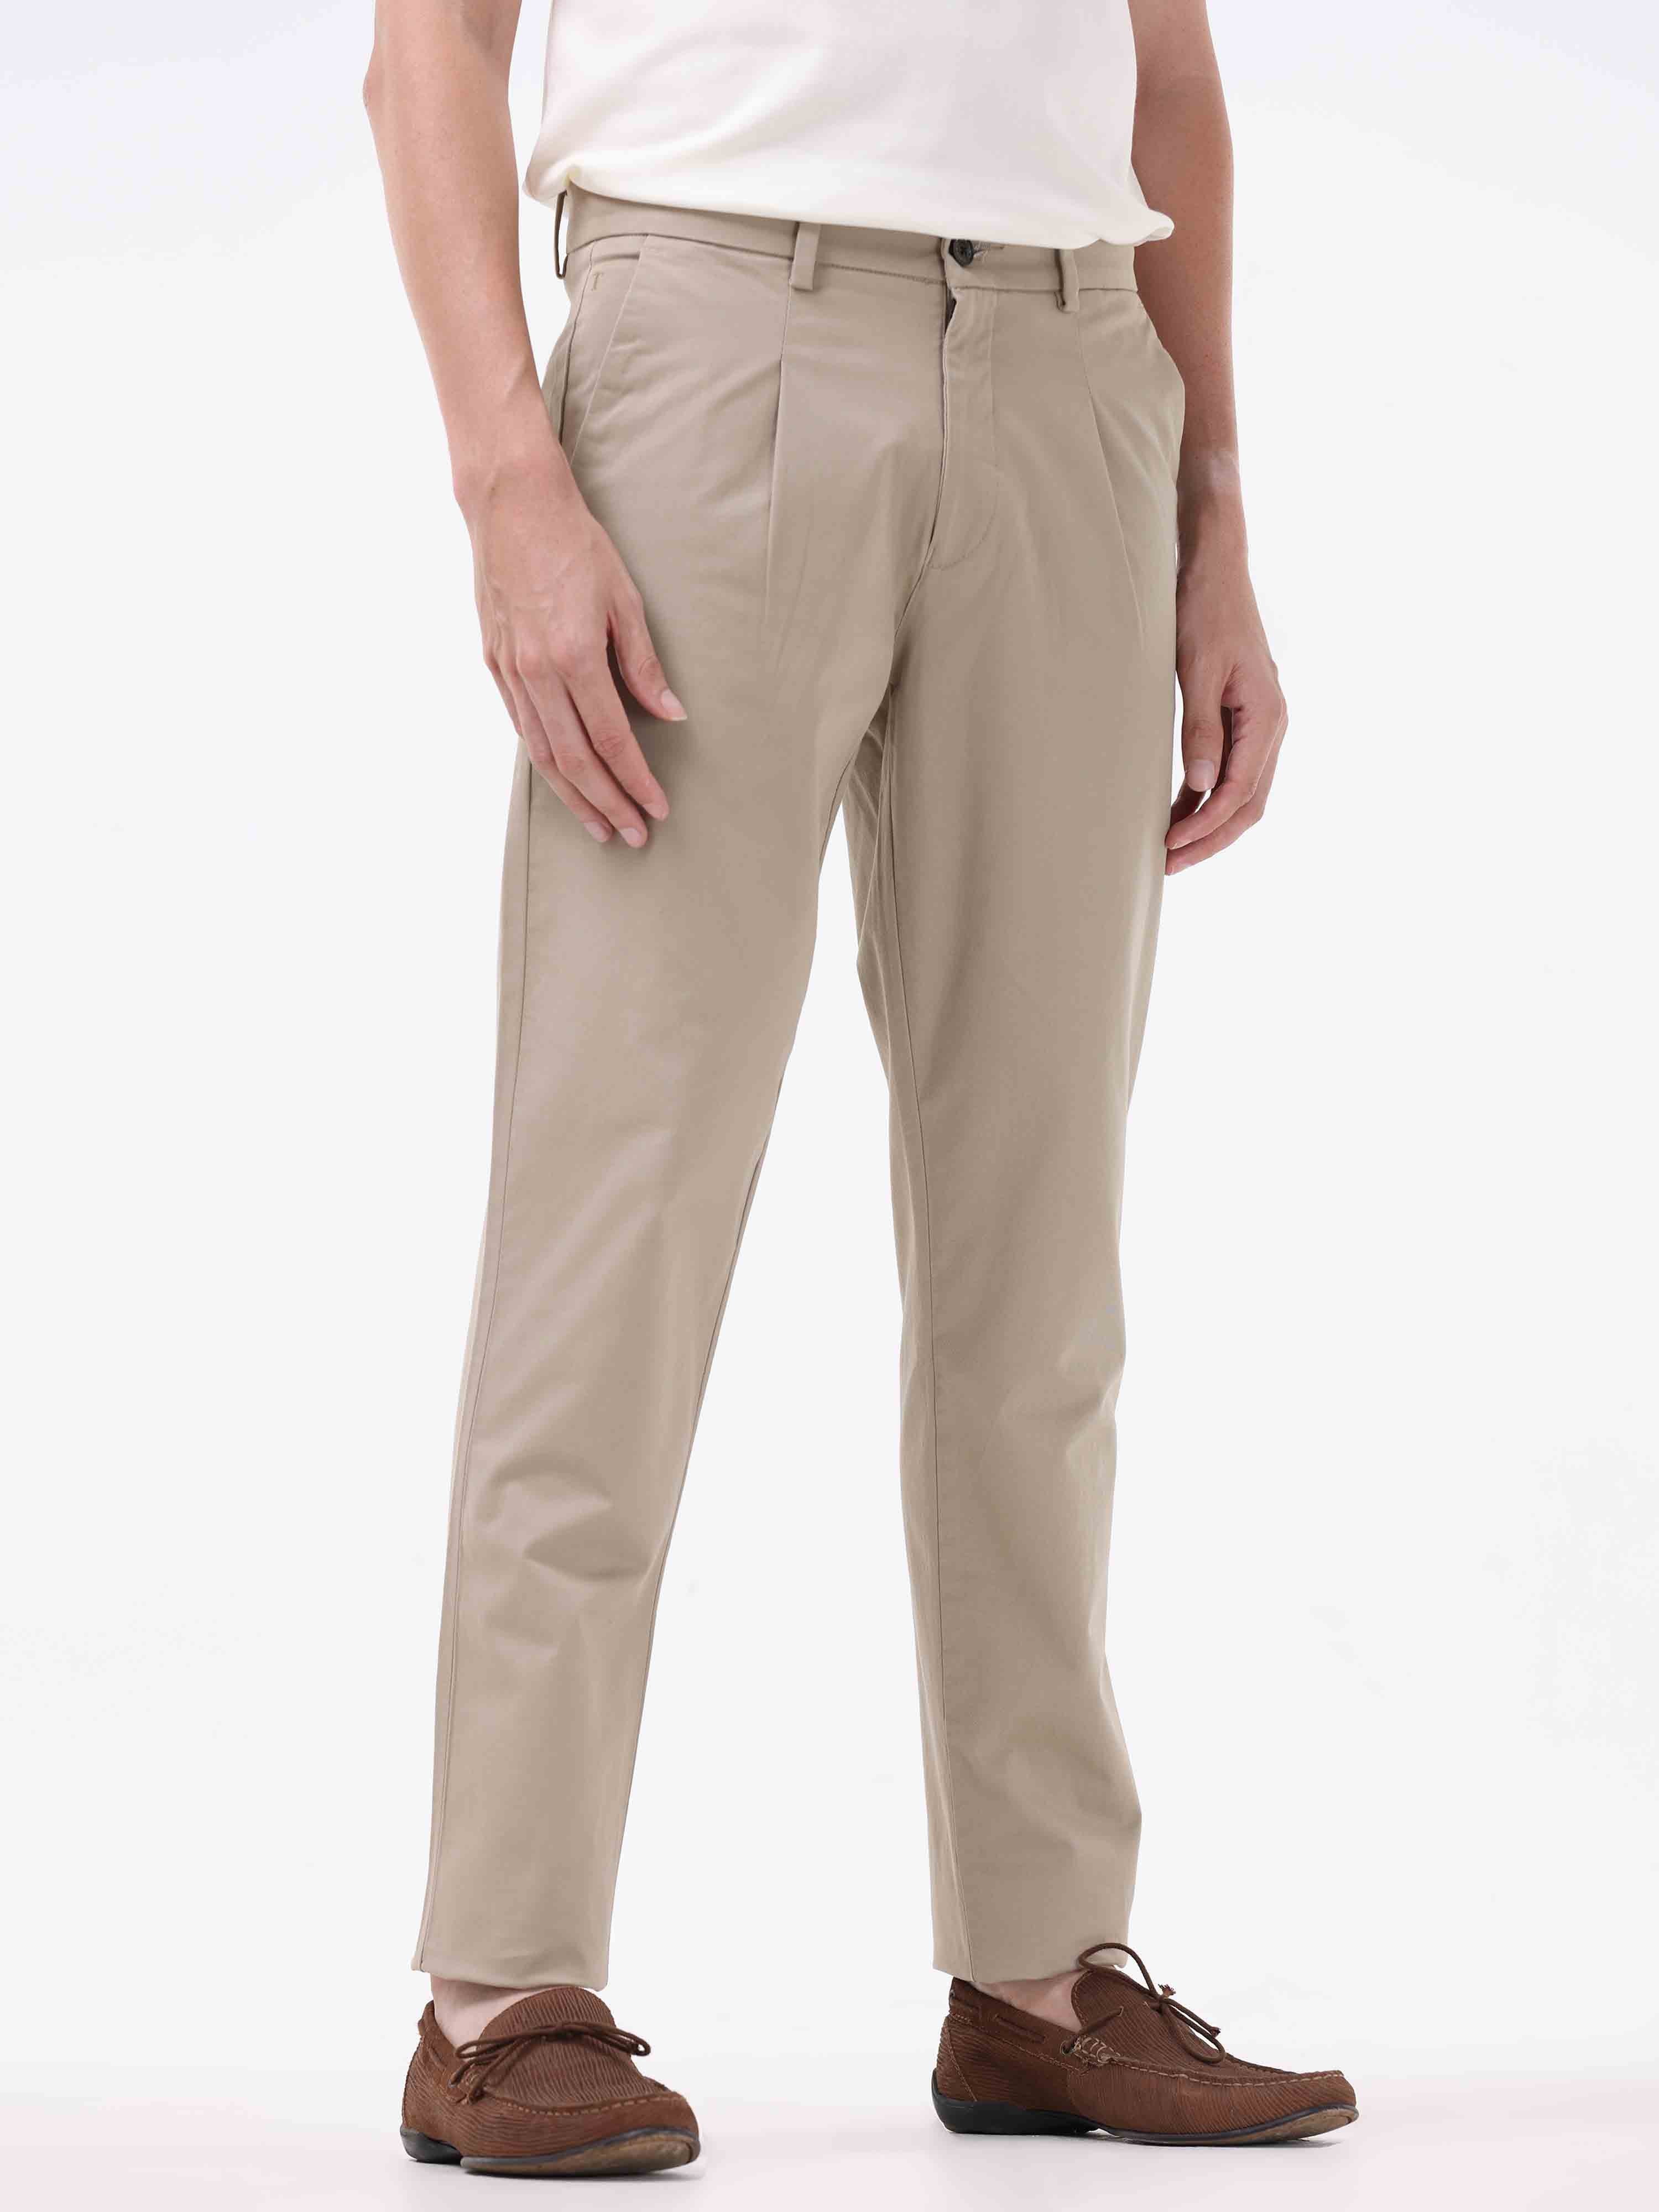 Men's Casual Pleated Solid Suit Pants Zipper Pocket Ankle-Length Pants  Trousers 